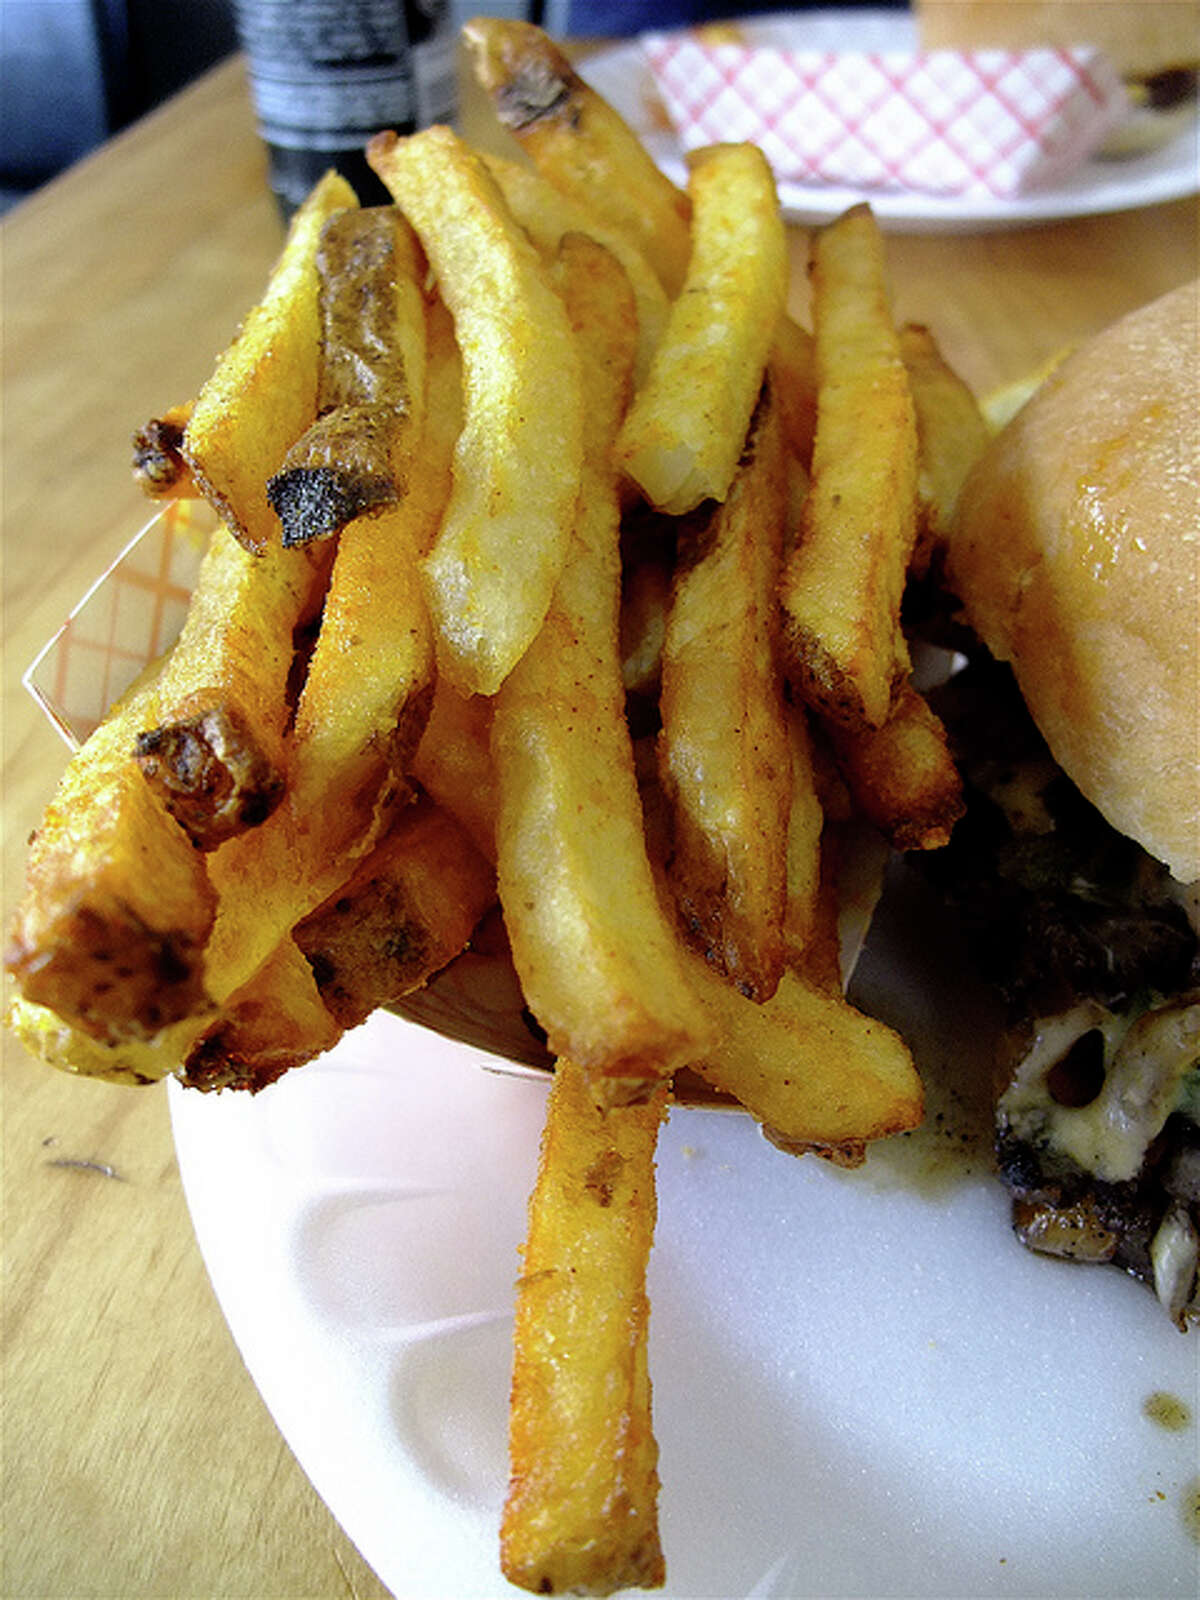 Fresh cut fries at Hubcap Grill